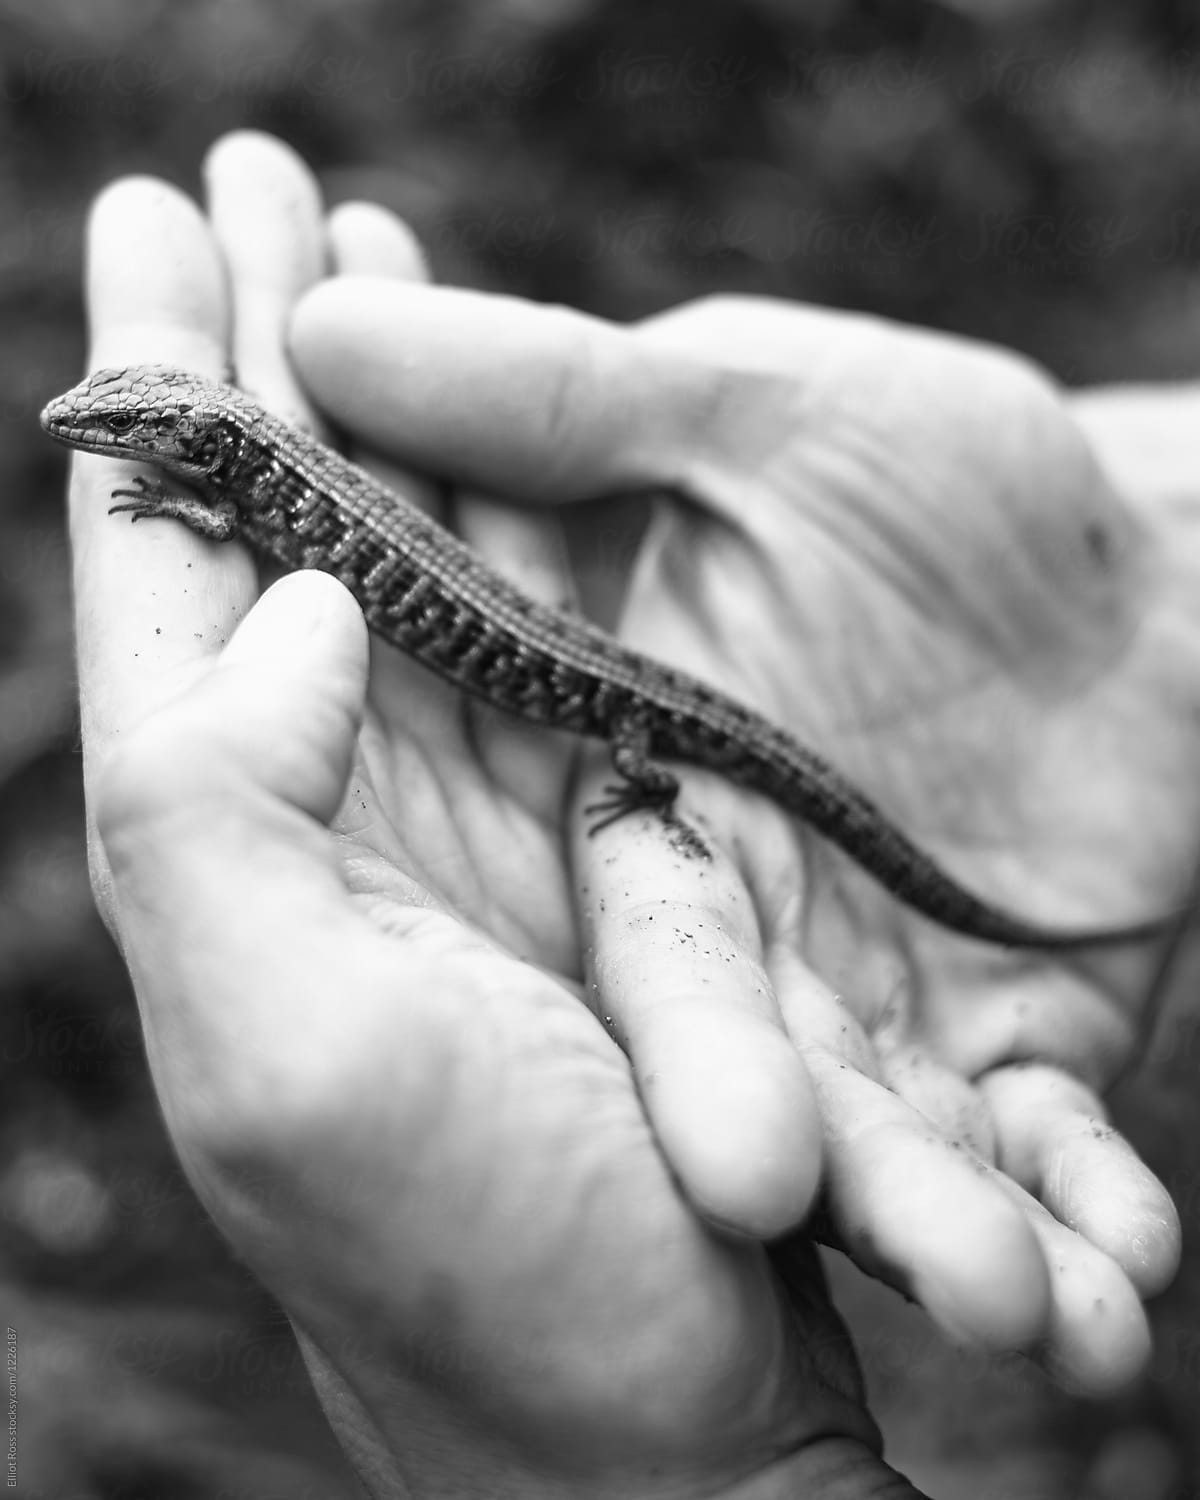 Small lizard in hand